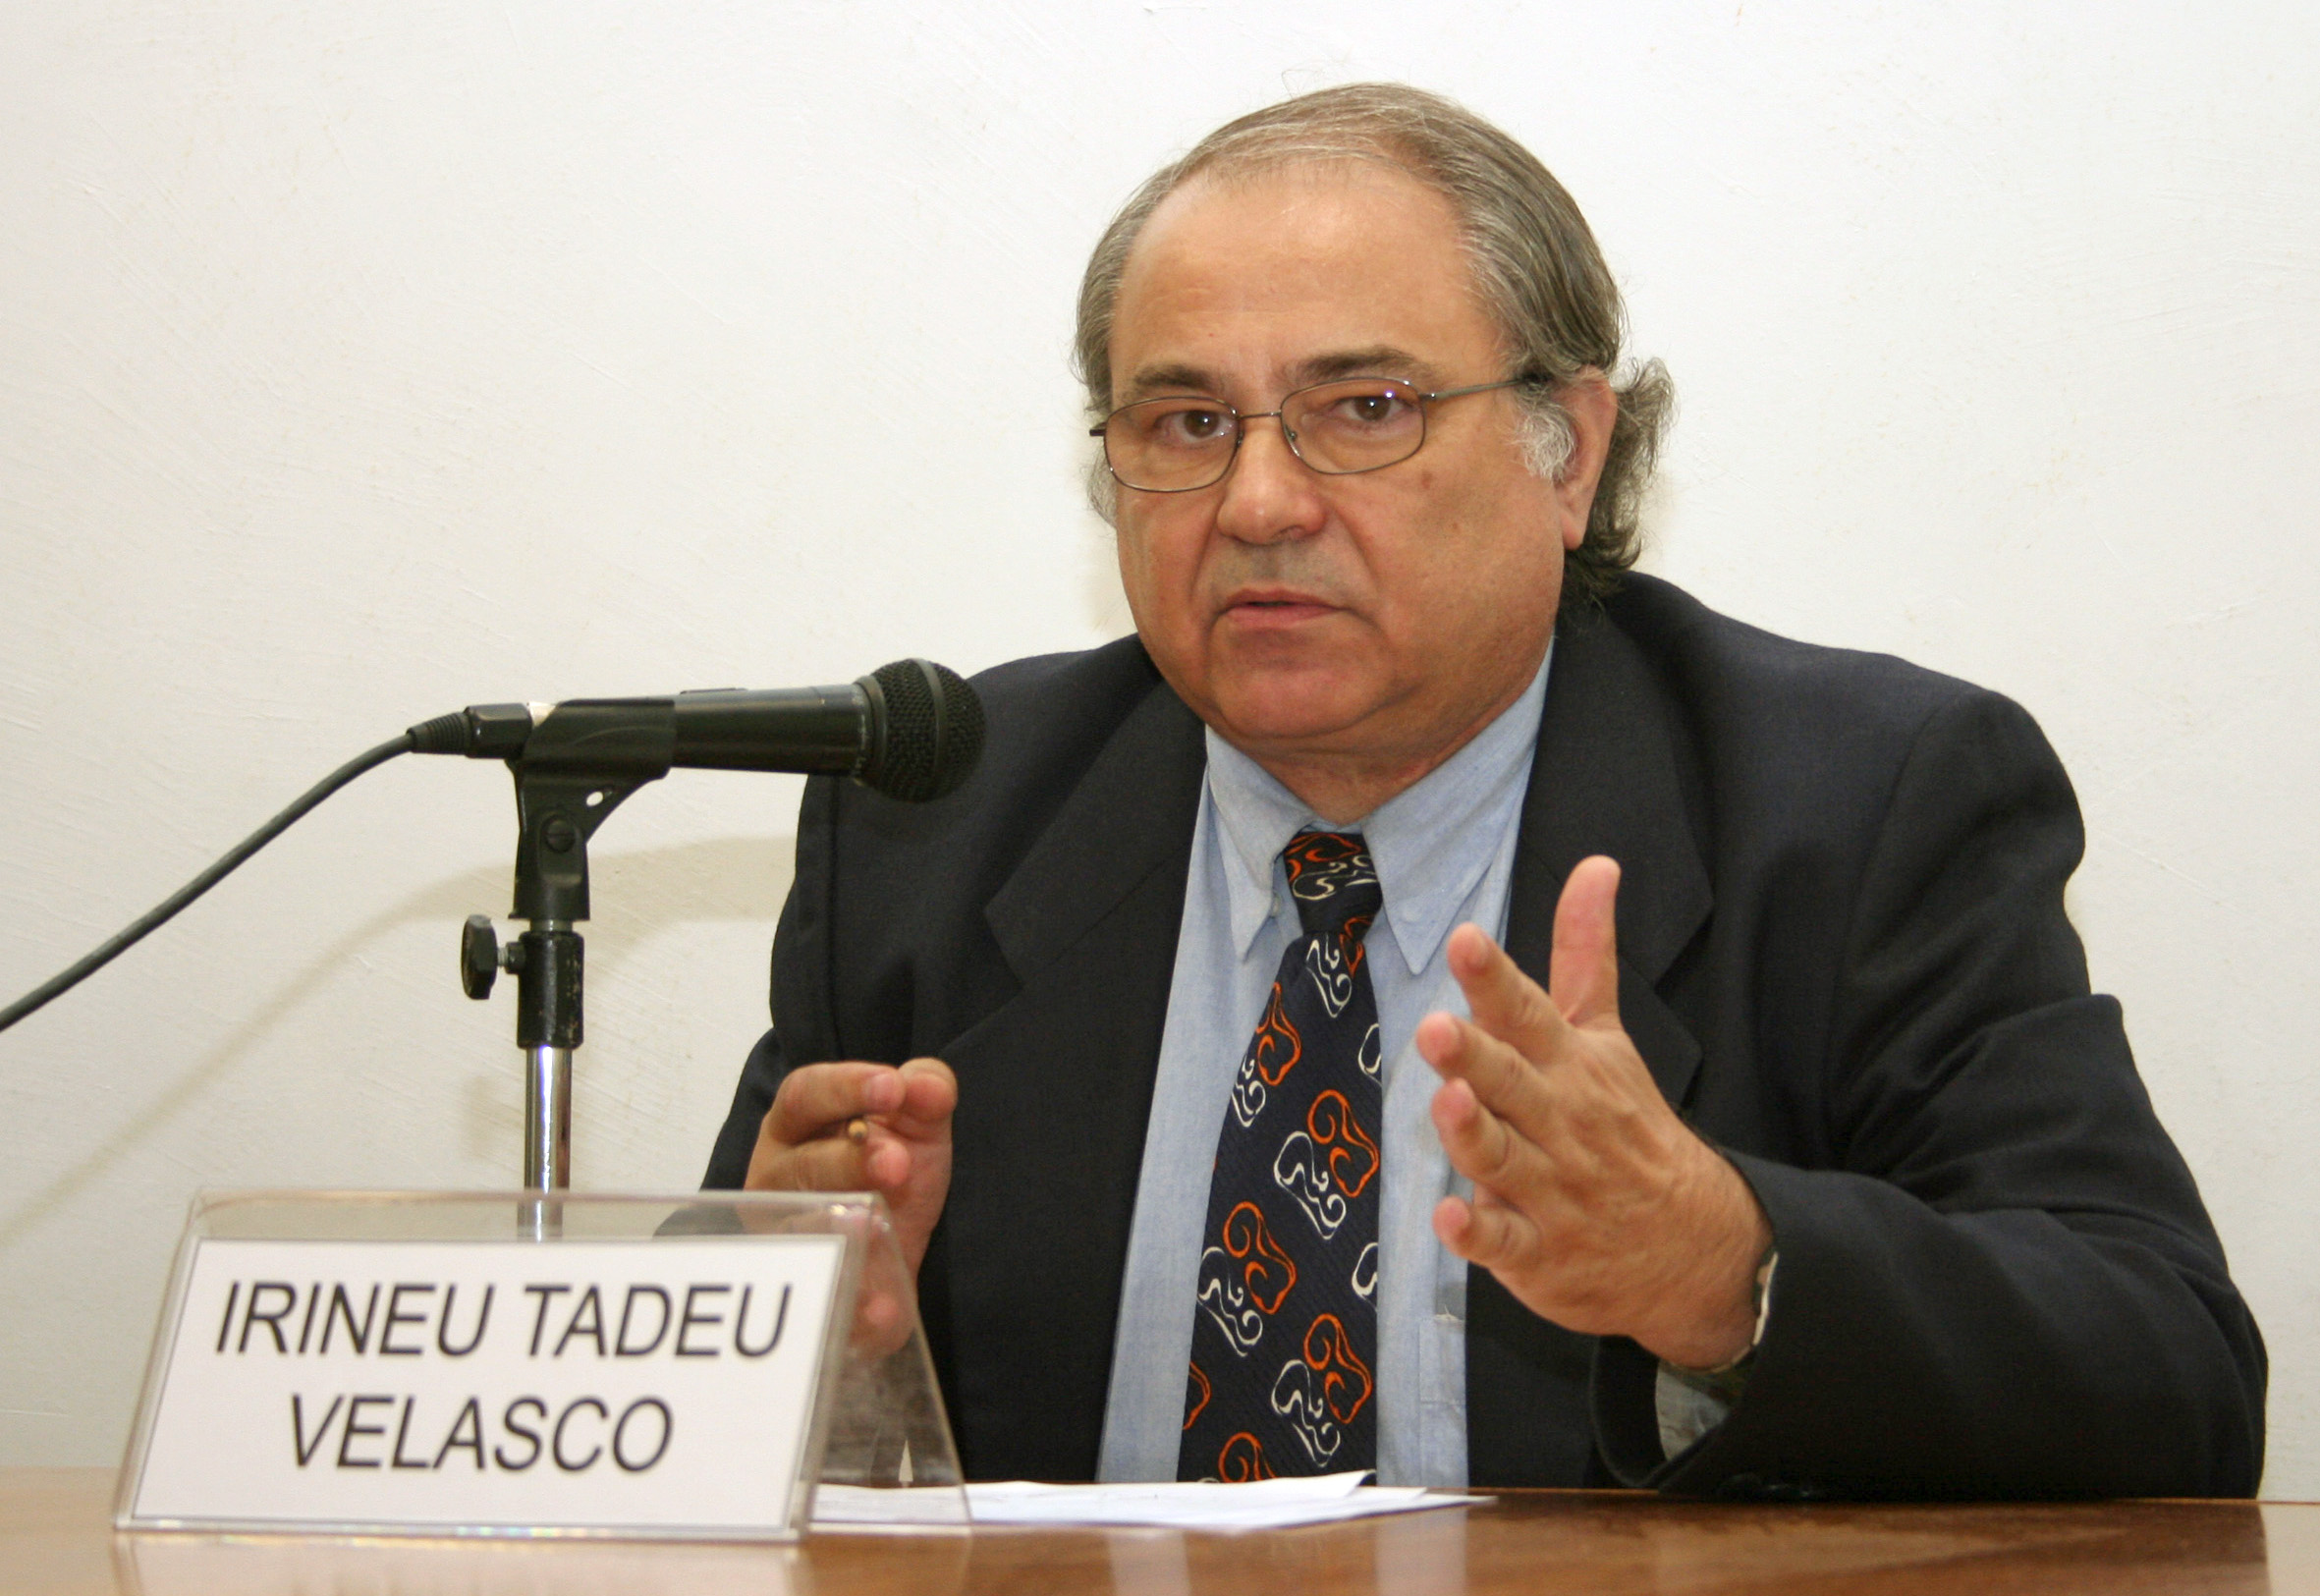 Irineu Tadeu Velasco